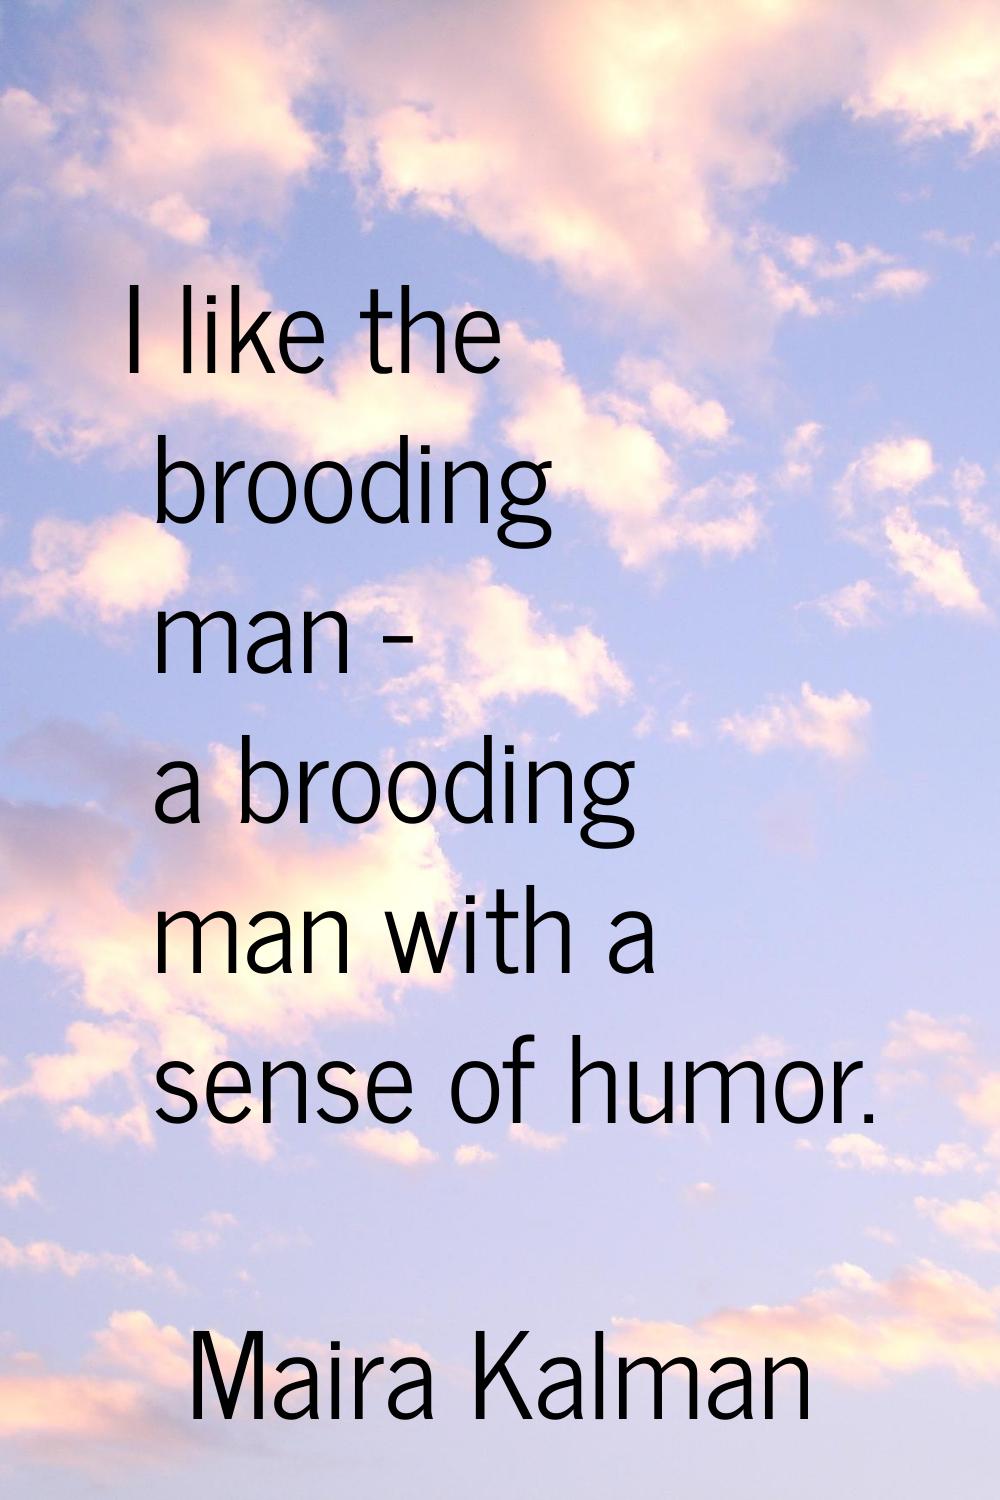 I like the brooding man - a brooding man with a sense of humor.